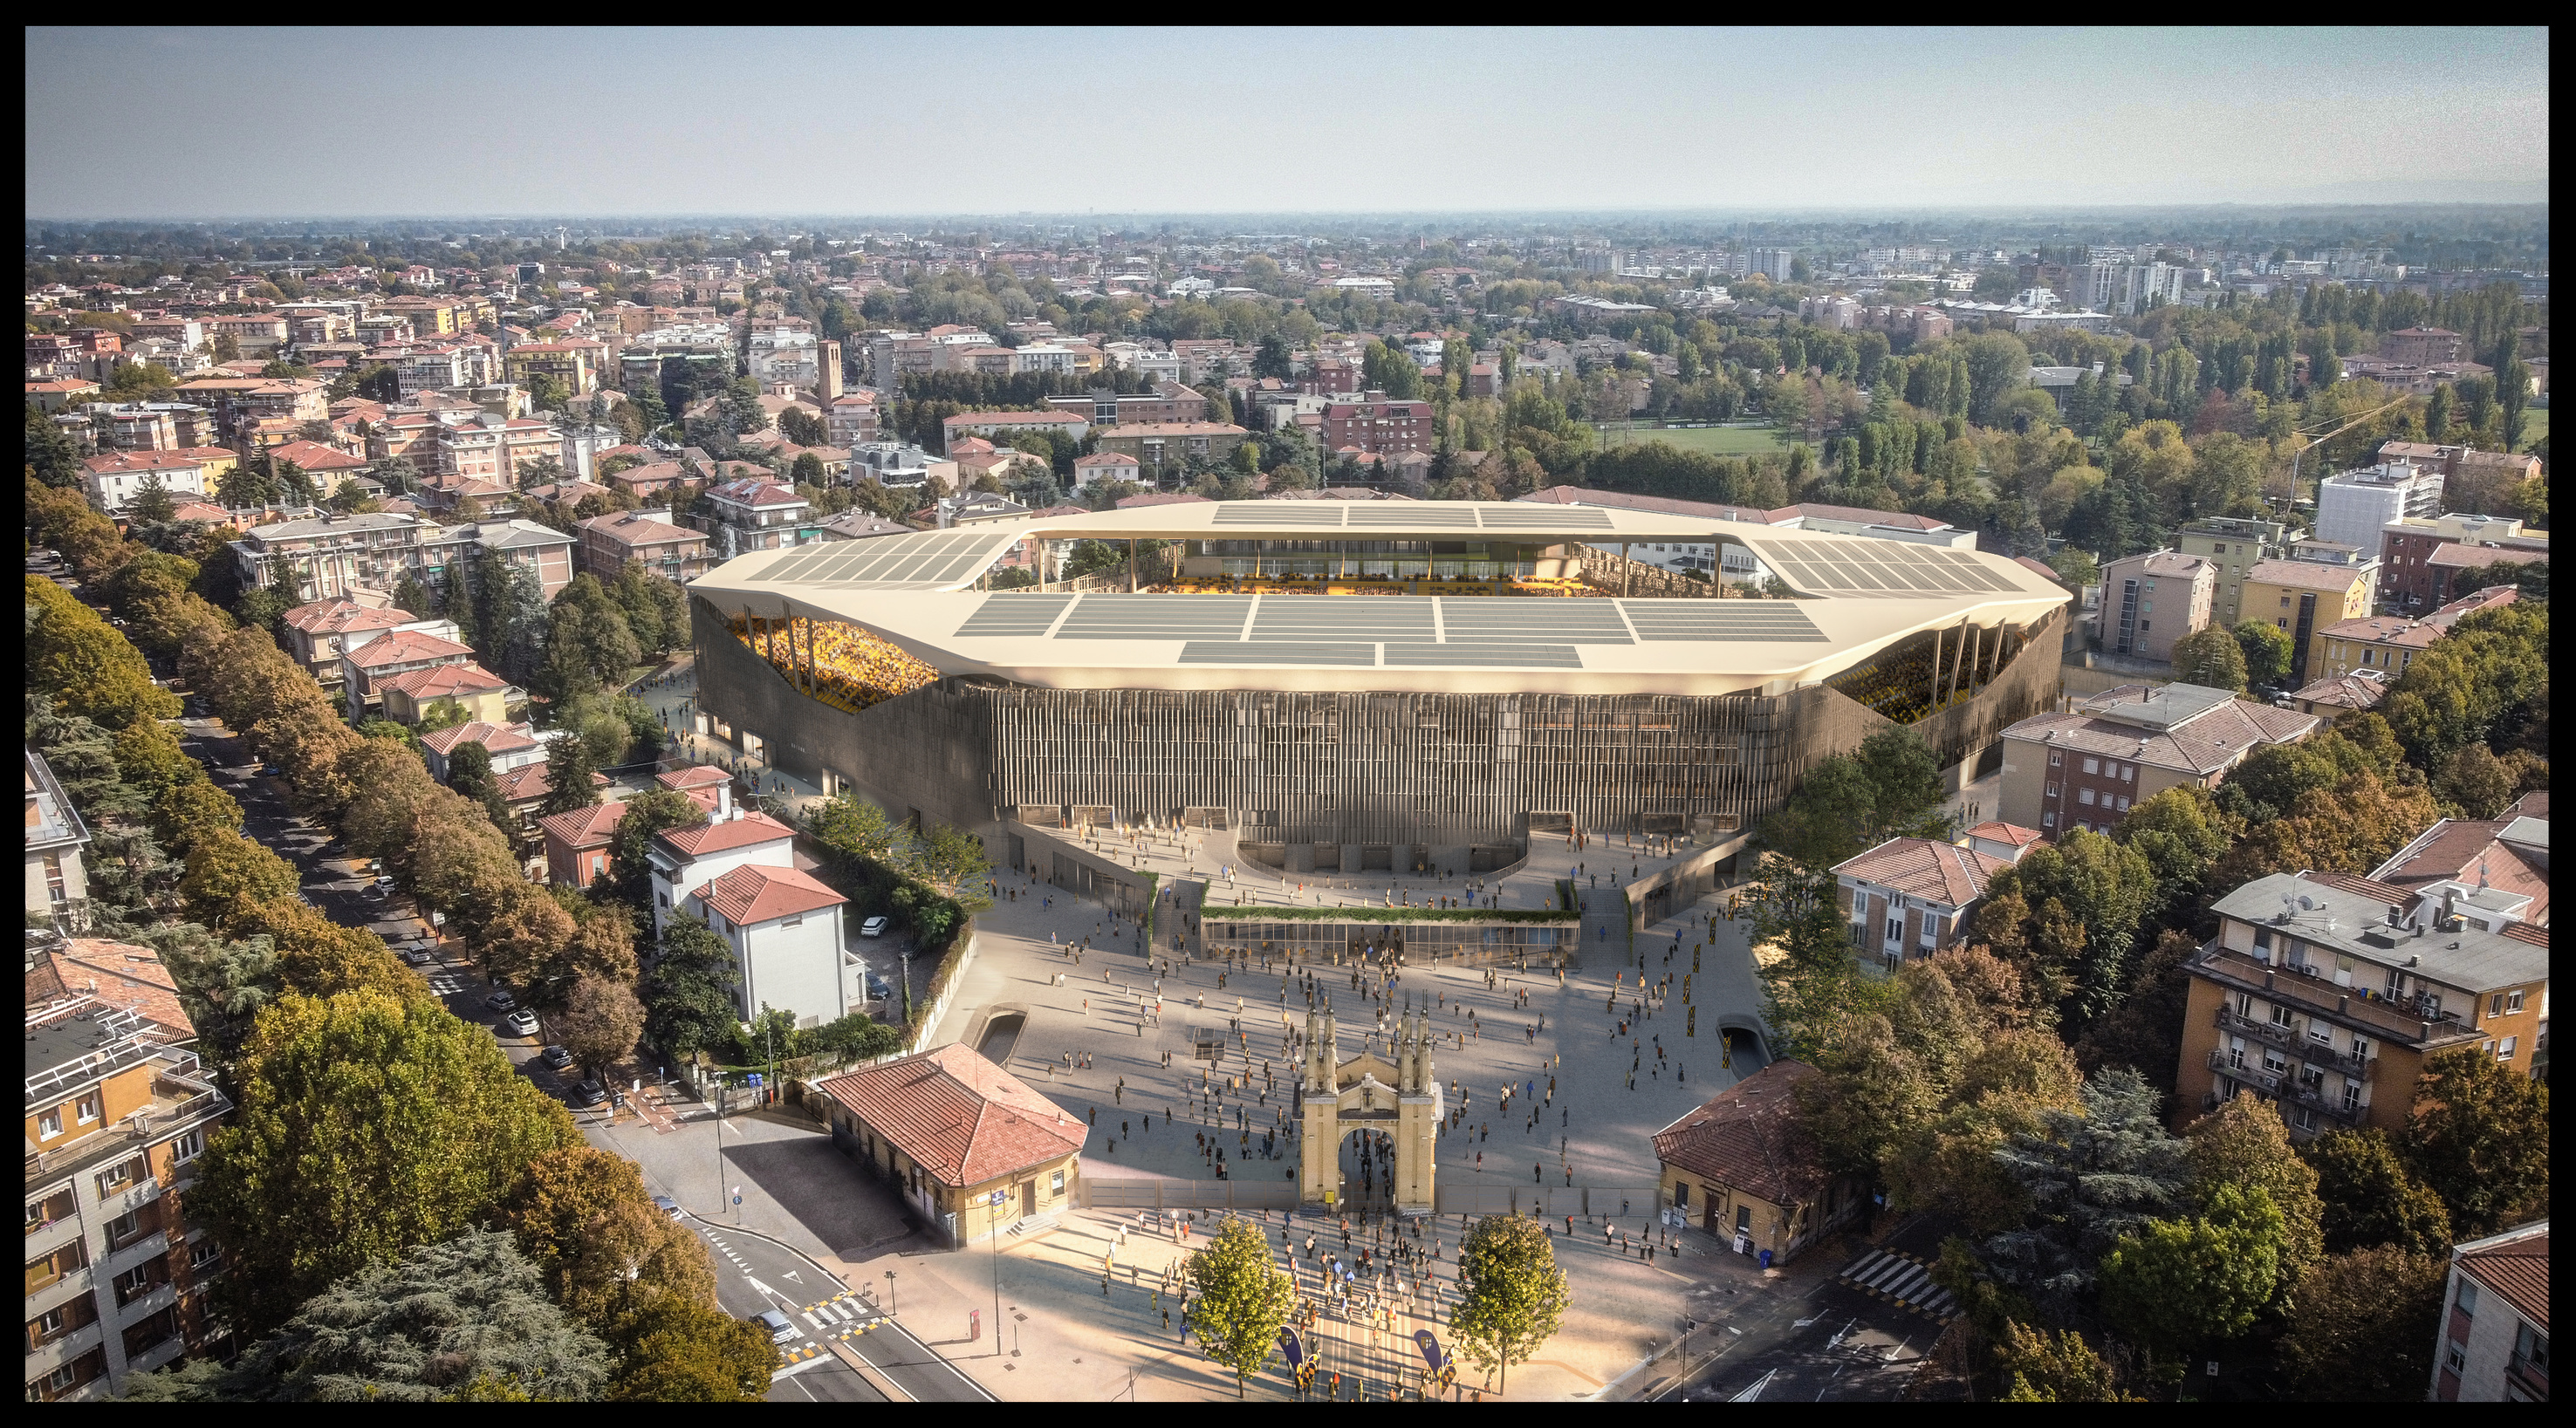 Rendering of the proposed stadium in Parma. 